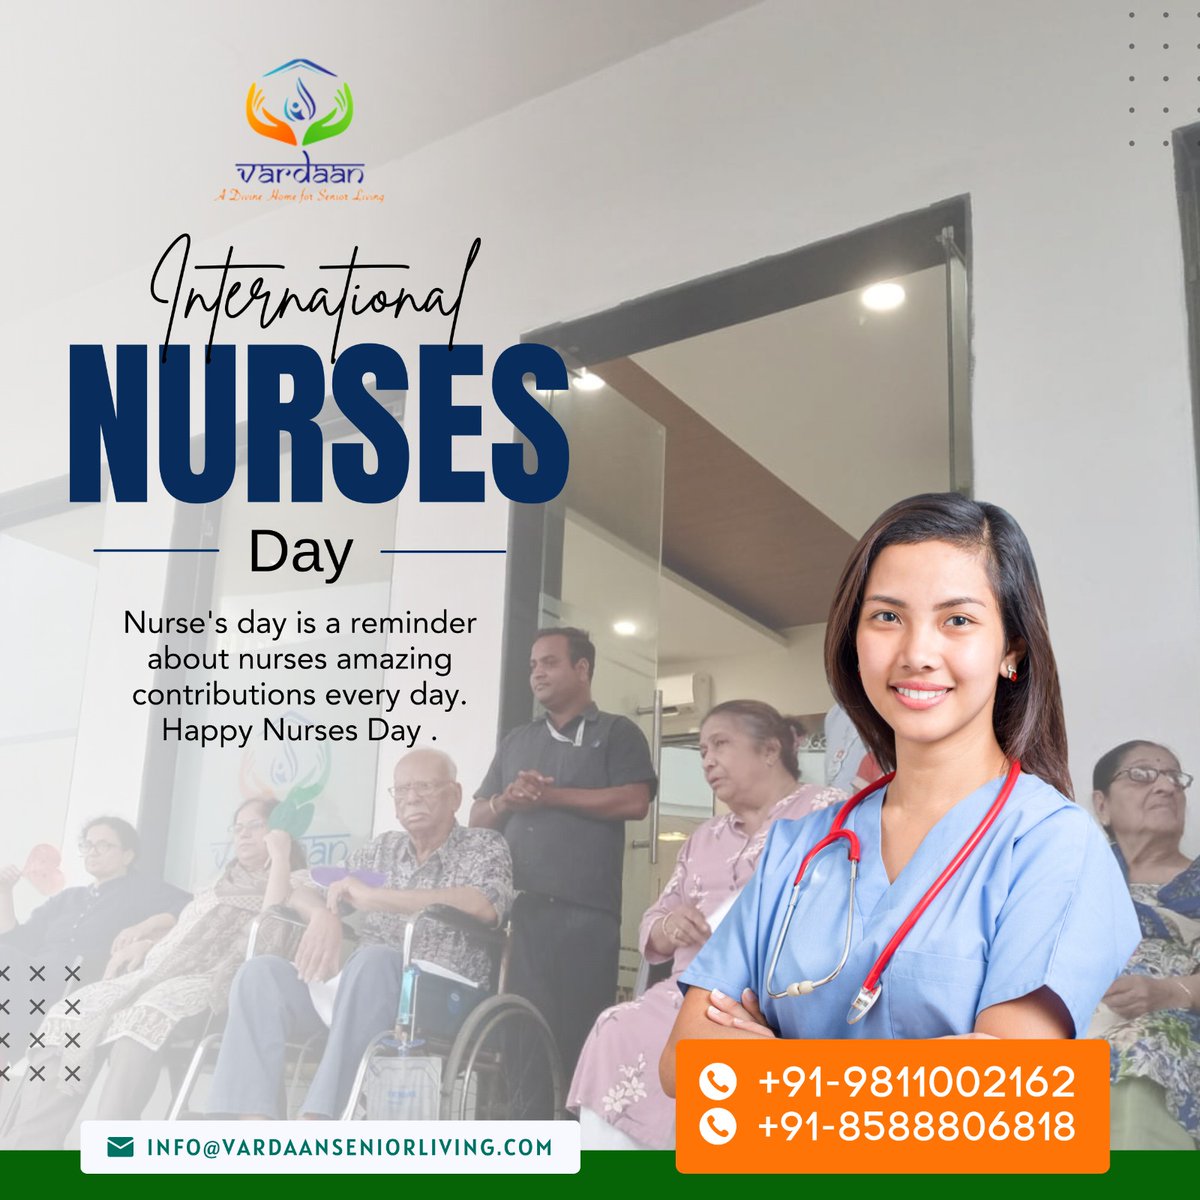 International Nurses Day
Happy Nurses Day! Your dedication and compassion inspire us. Thank you for your selfless service and unwavering commitment to healing.

#InternationalNursesDay #ThankYouNurses #NursesRock #WeSaluteYou #NurseDay #NurseLife #NursingStrong #NurseHeroes